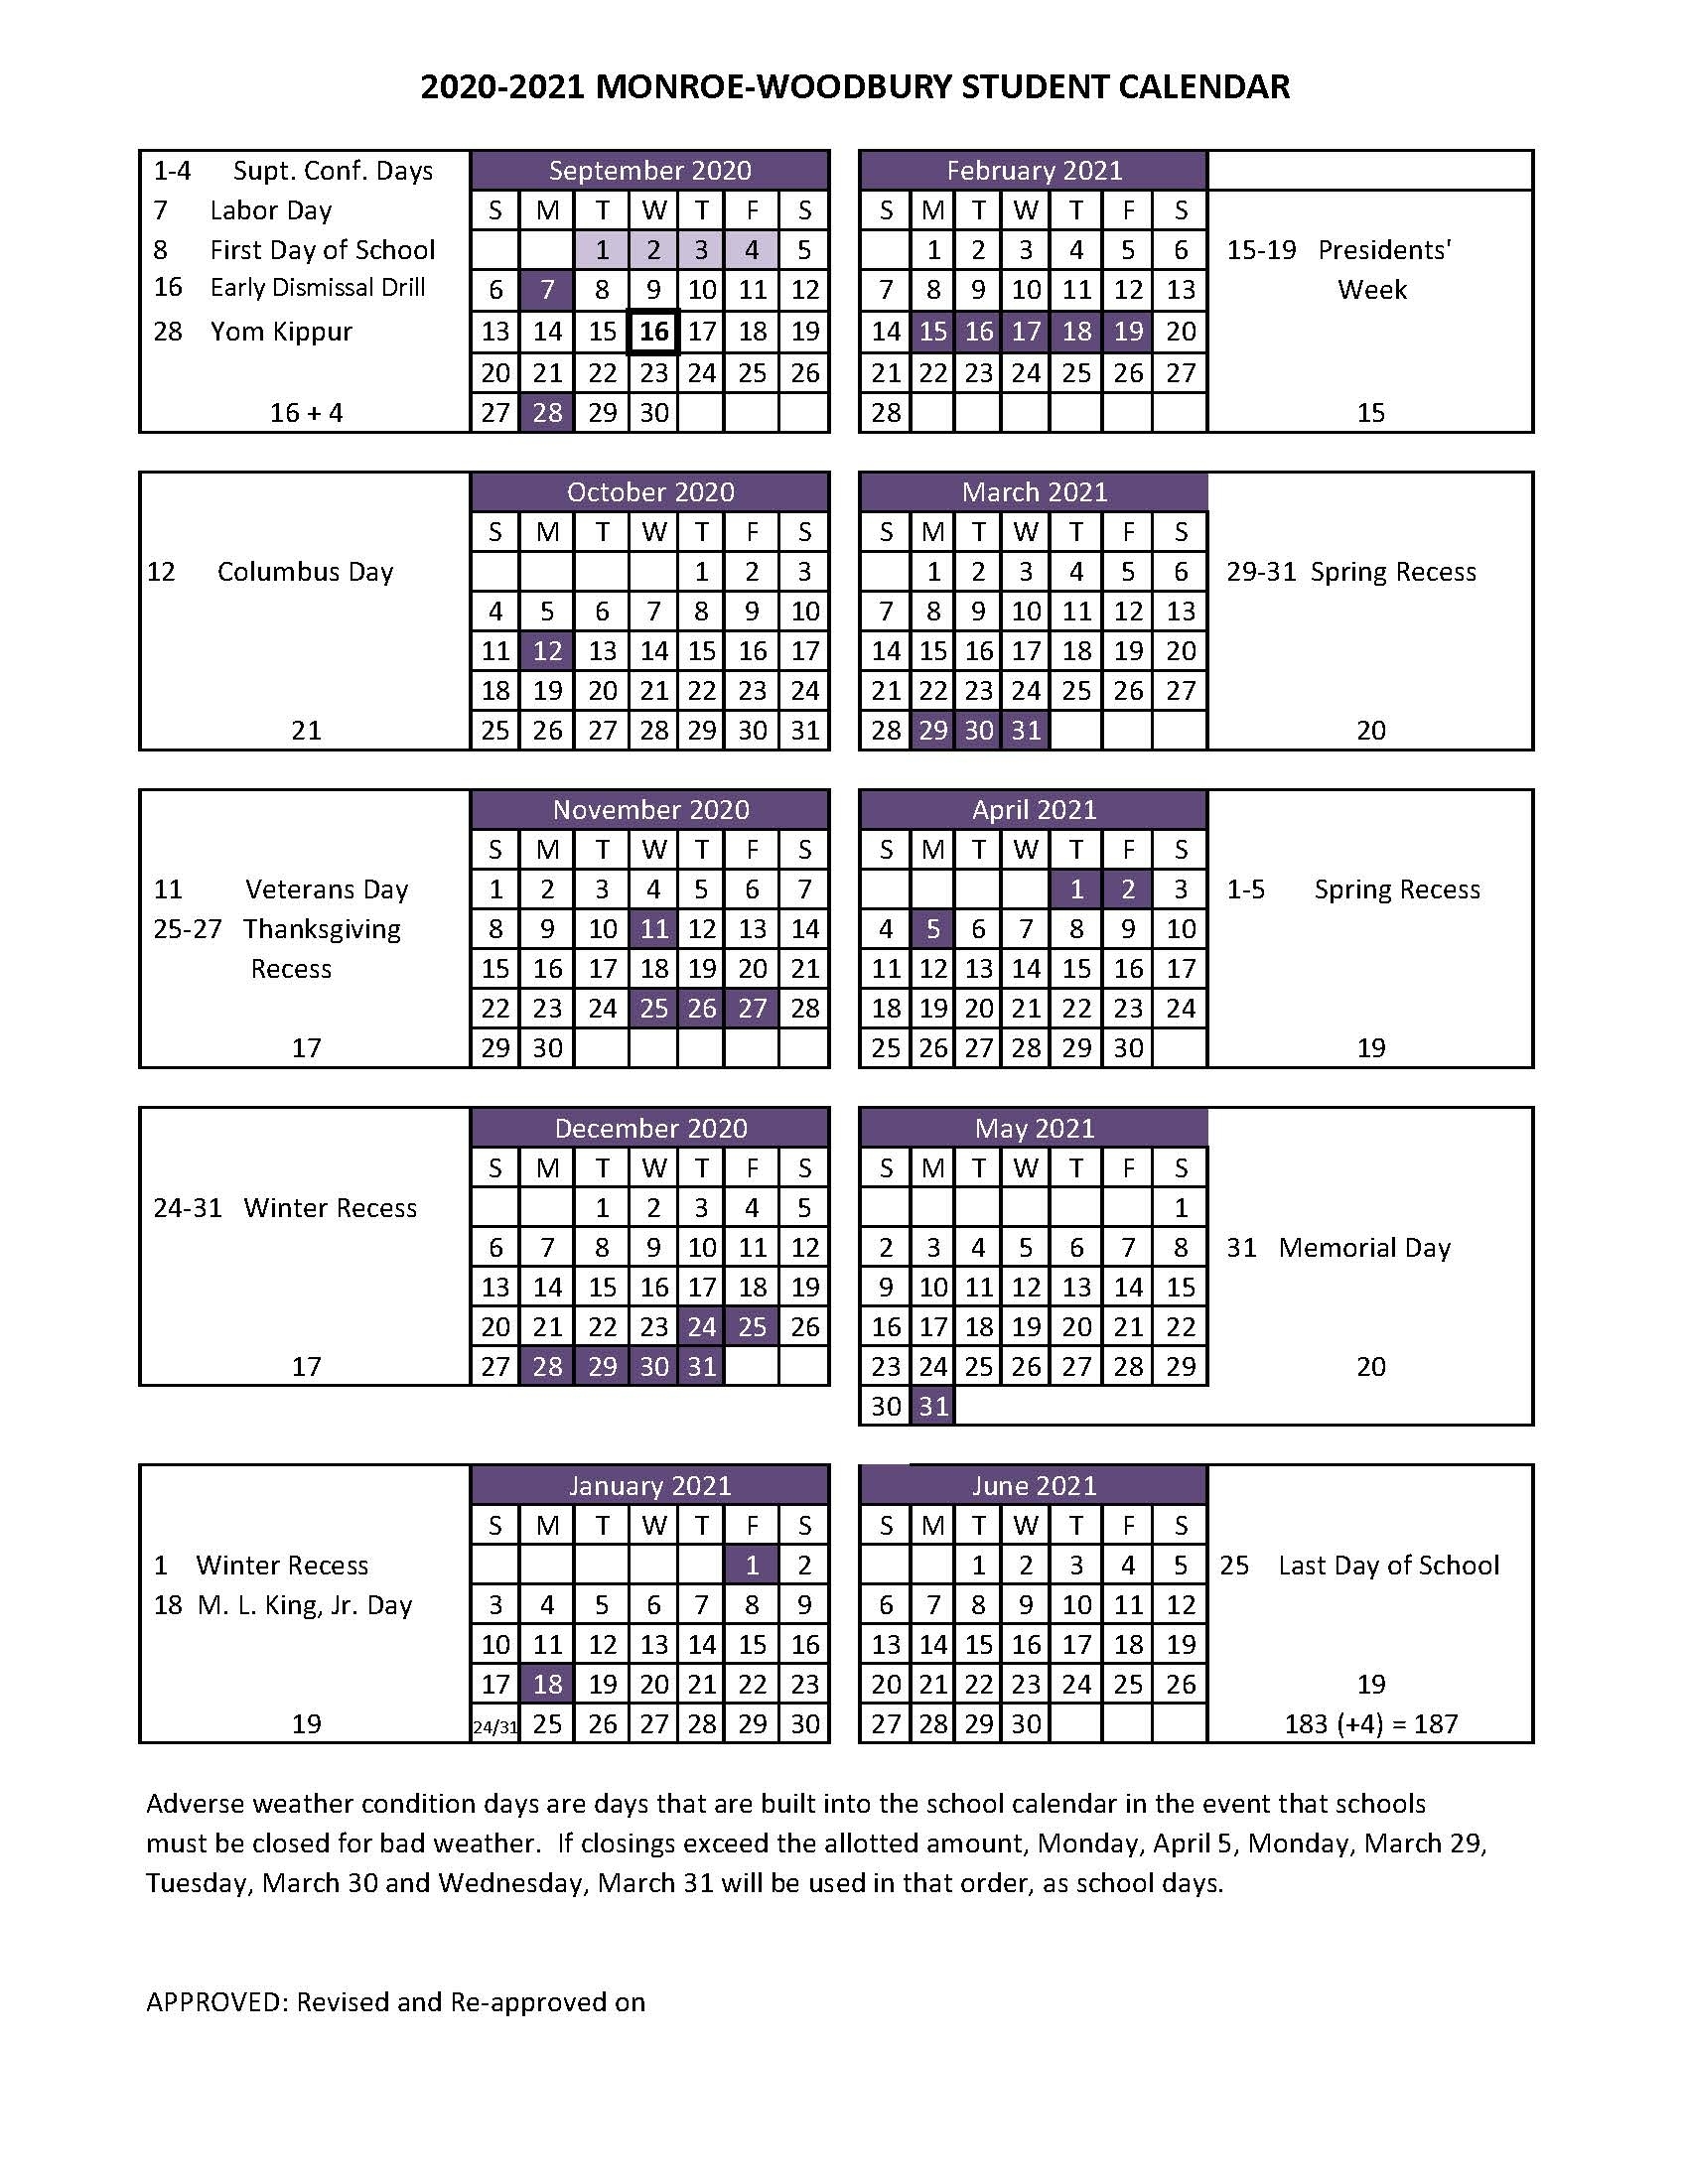 2020-2021 Student Calendar - Monroe-Woodbury Central School District, Central Valley, Ny October 2021 Calendar School Holidays